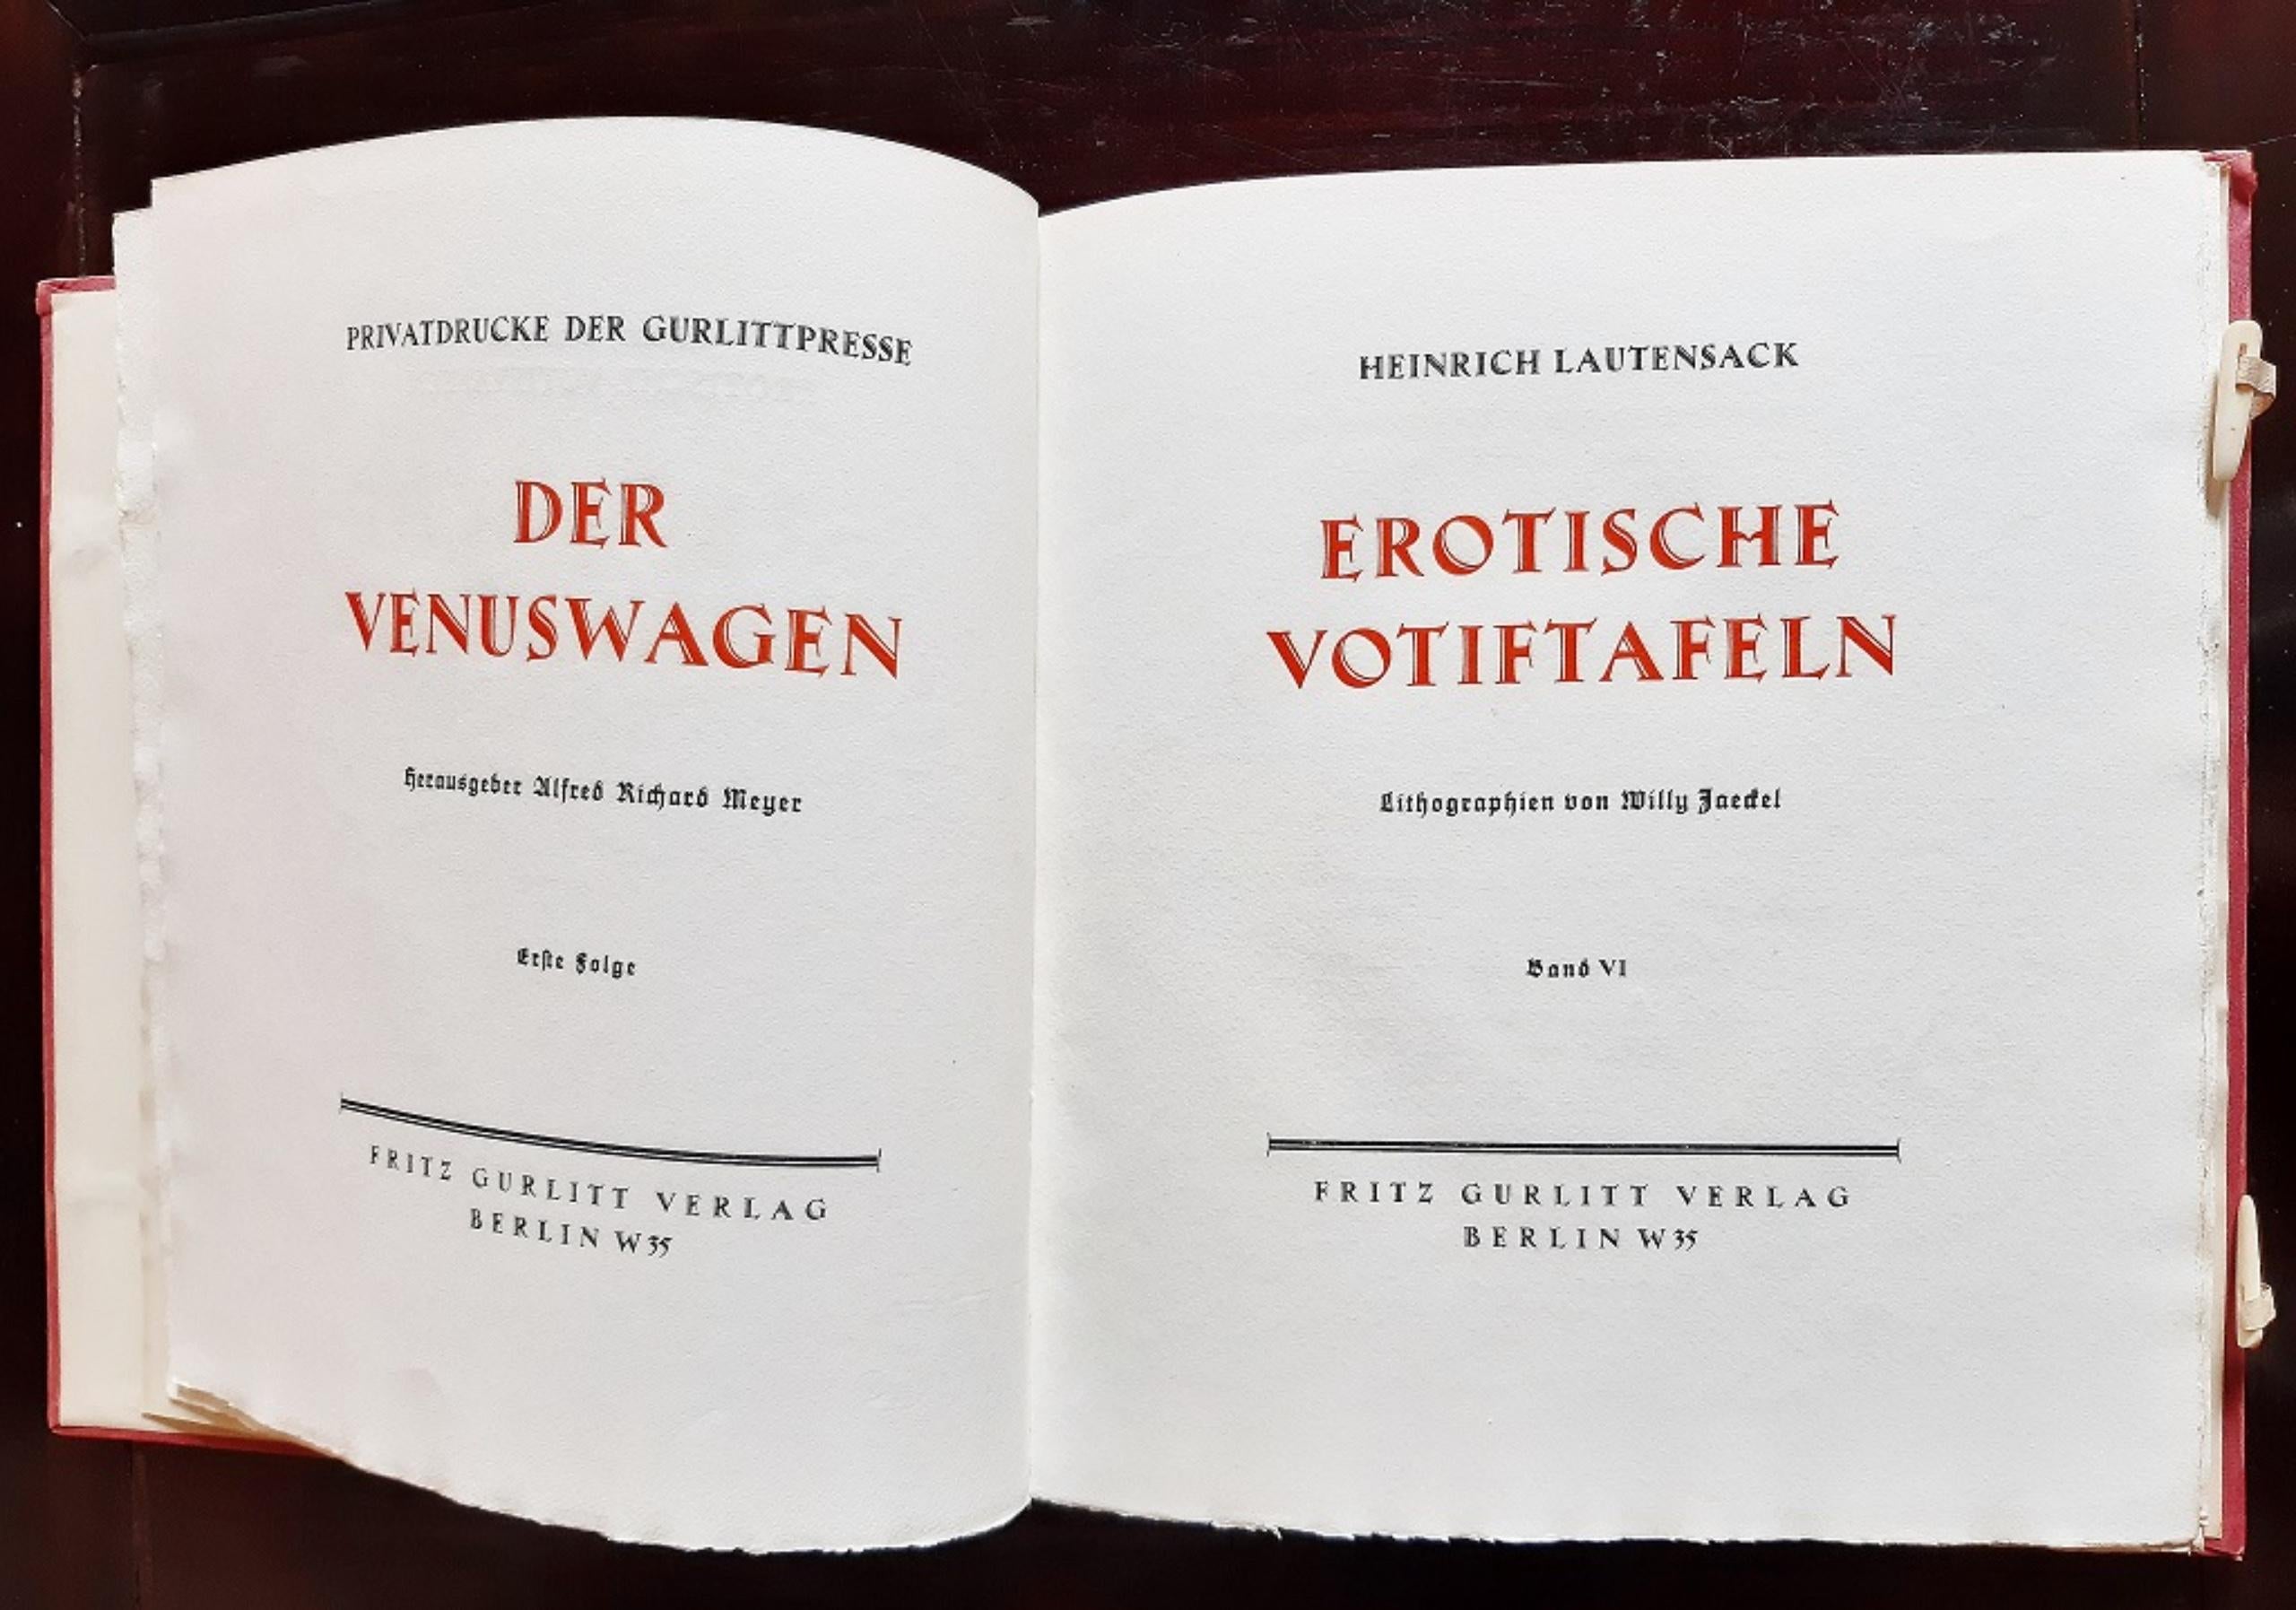 Erotische Votiftafeln is an original modern rare book written by Heinrich Lautensack (1522–1590) and illustrated by Willy Jaeckel (Breslau, 1888 – Berlin, 1944) in 1919.

Original Edition.

Published by Fritz Gurlitt, Berlin.

700 numbered and